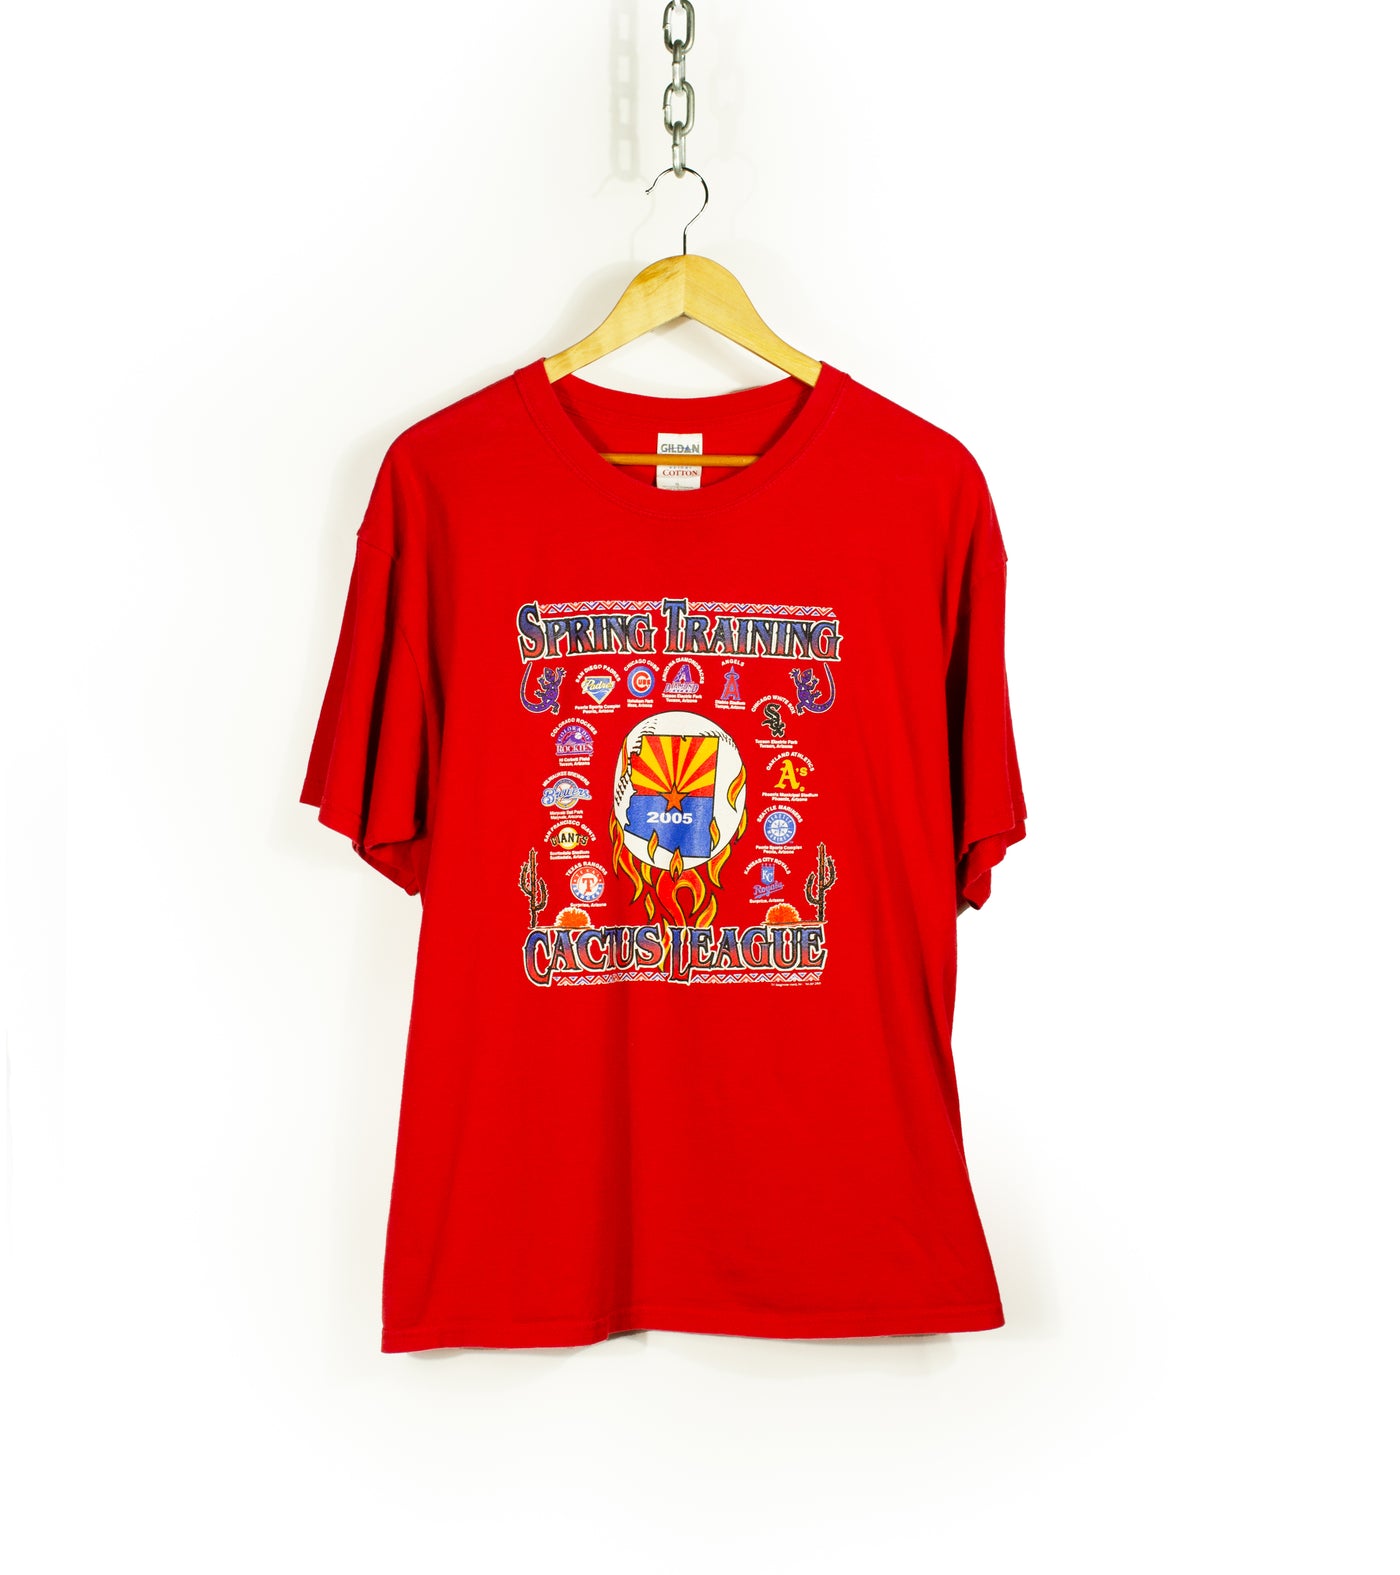 2005 Spring Training Cactus League T-Shirt